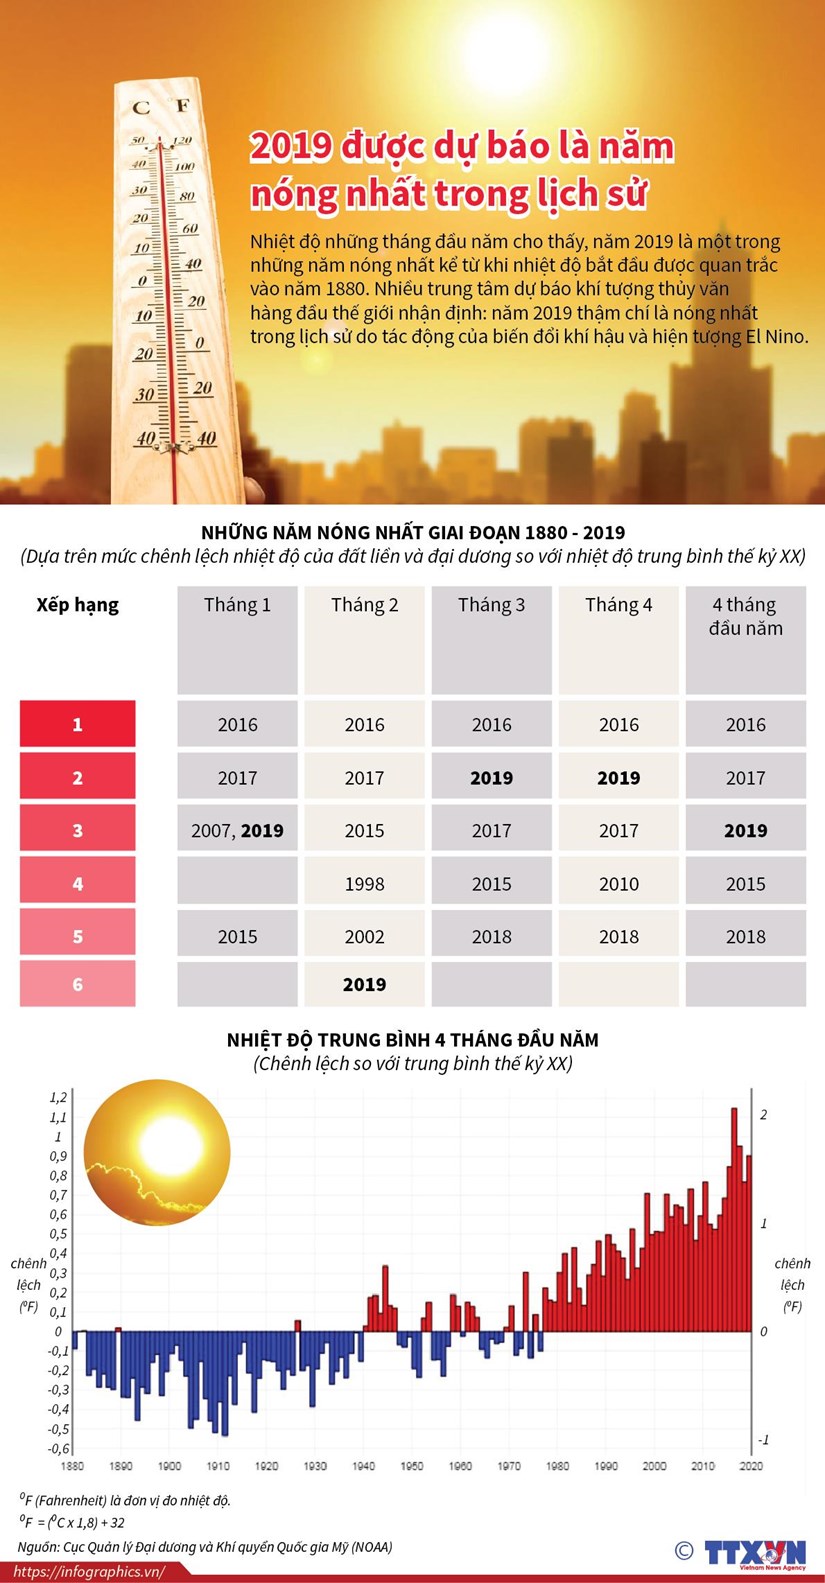 [Infographics] 2019 duoc du bao la nam nong nhat trong lich su hinh anh 1